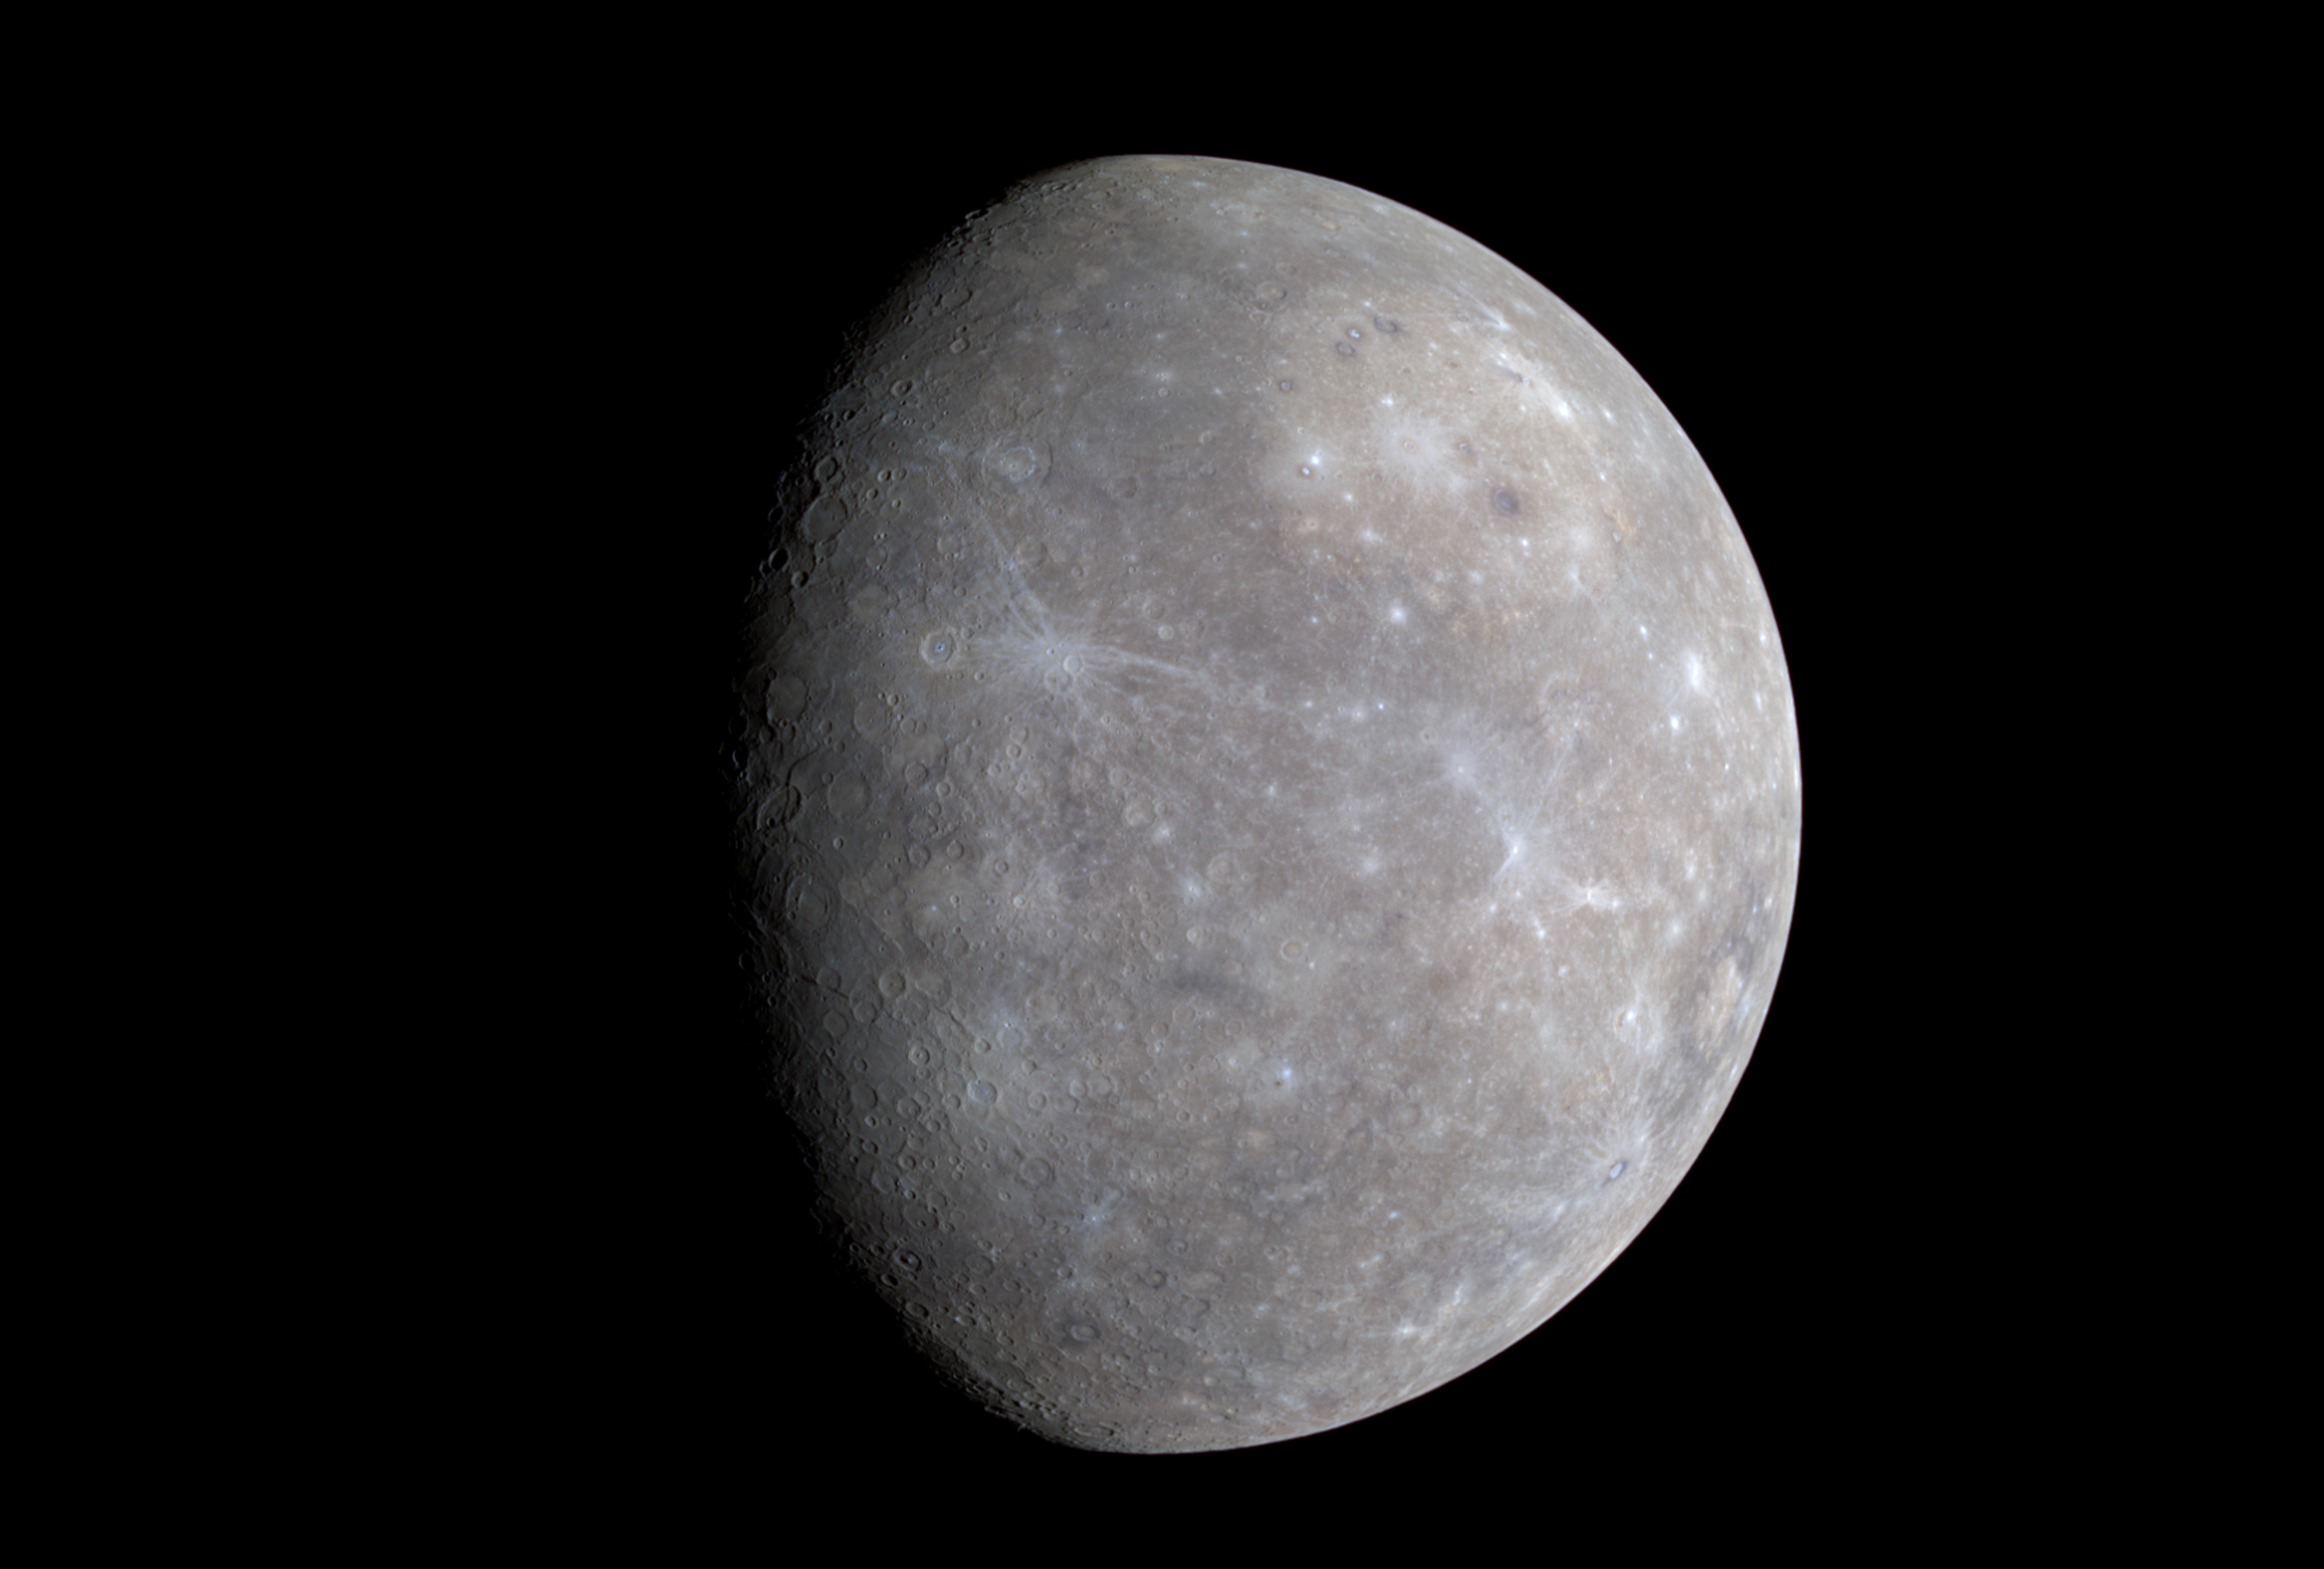 file-mercury-in-color-prockter07-jpg-wikimedia-commons